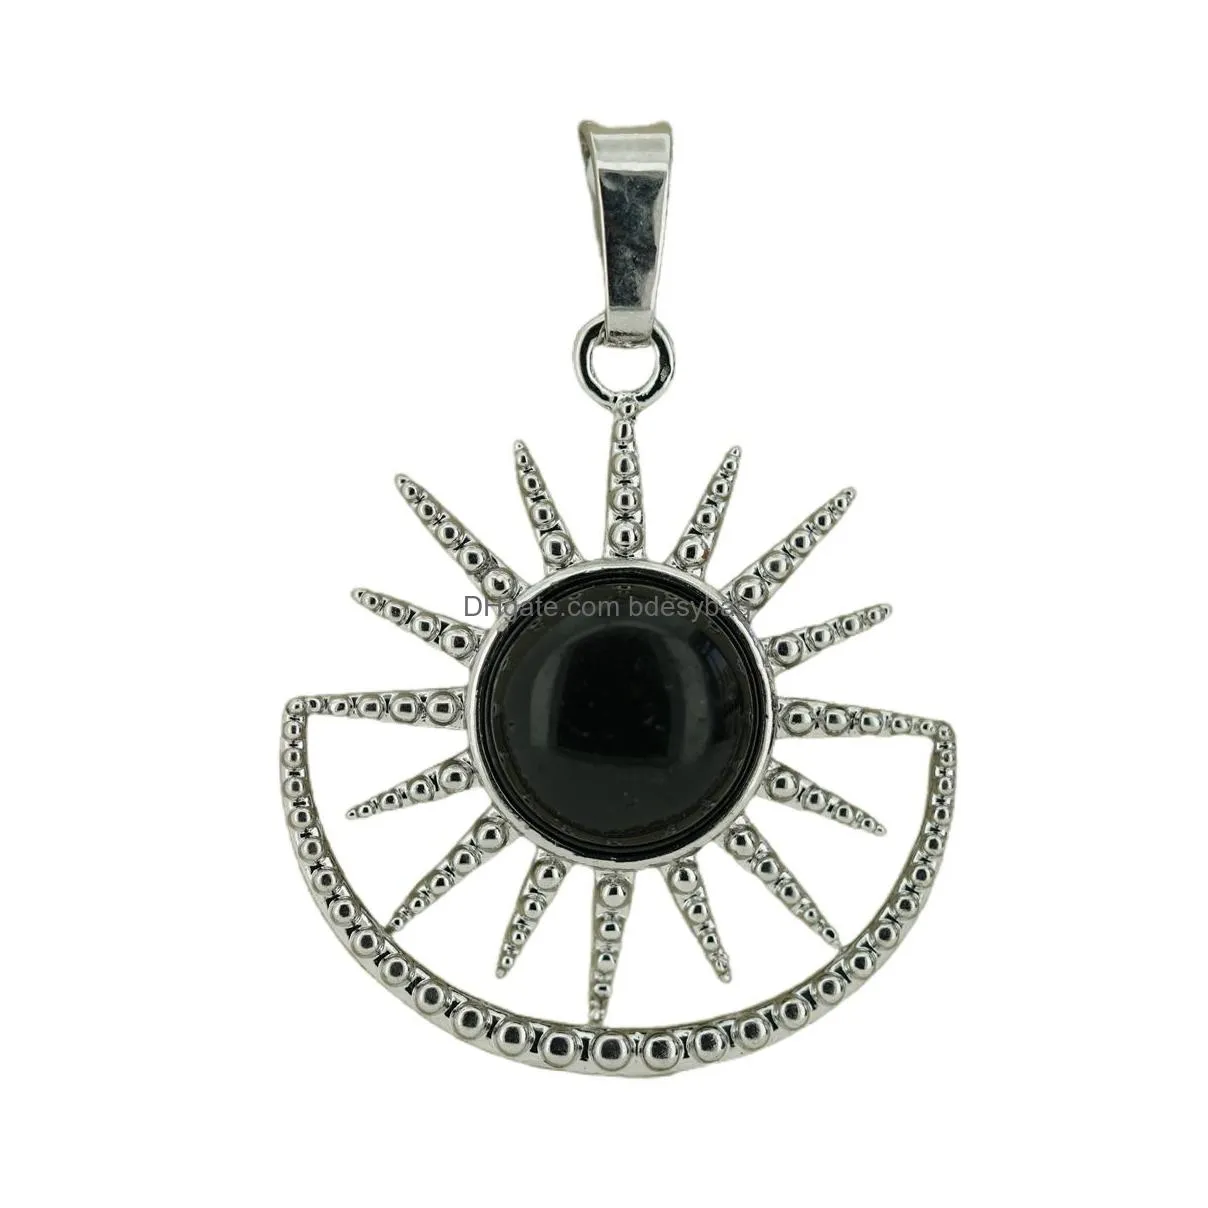 sun shape pendant natural stone healing crystal quartz copper moon pendant for women men jewelry making